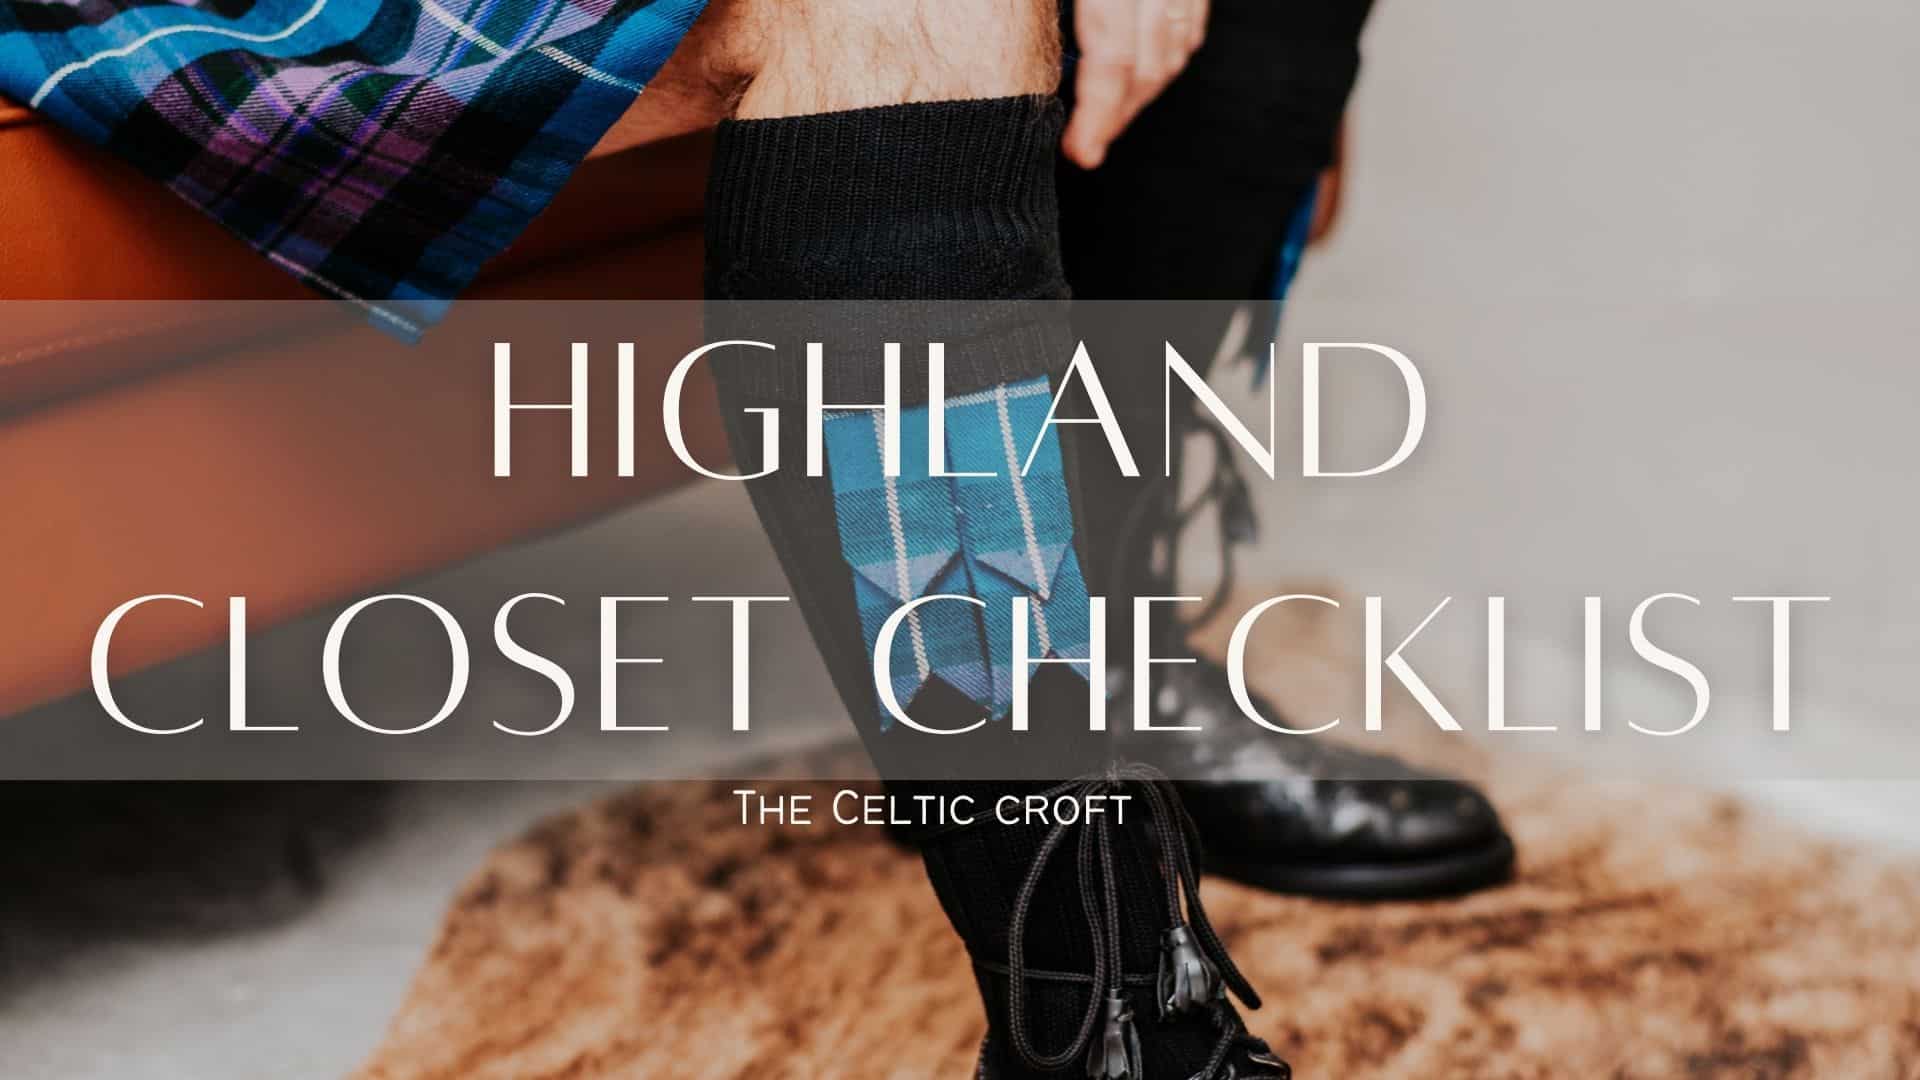 Highland Closet Checklist_01